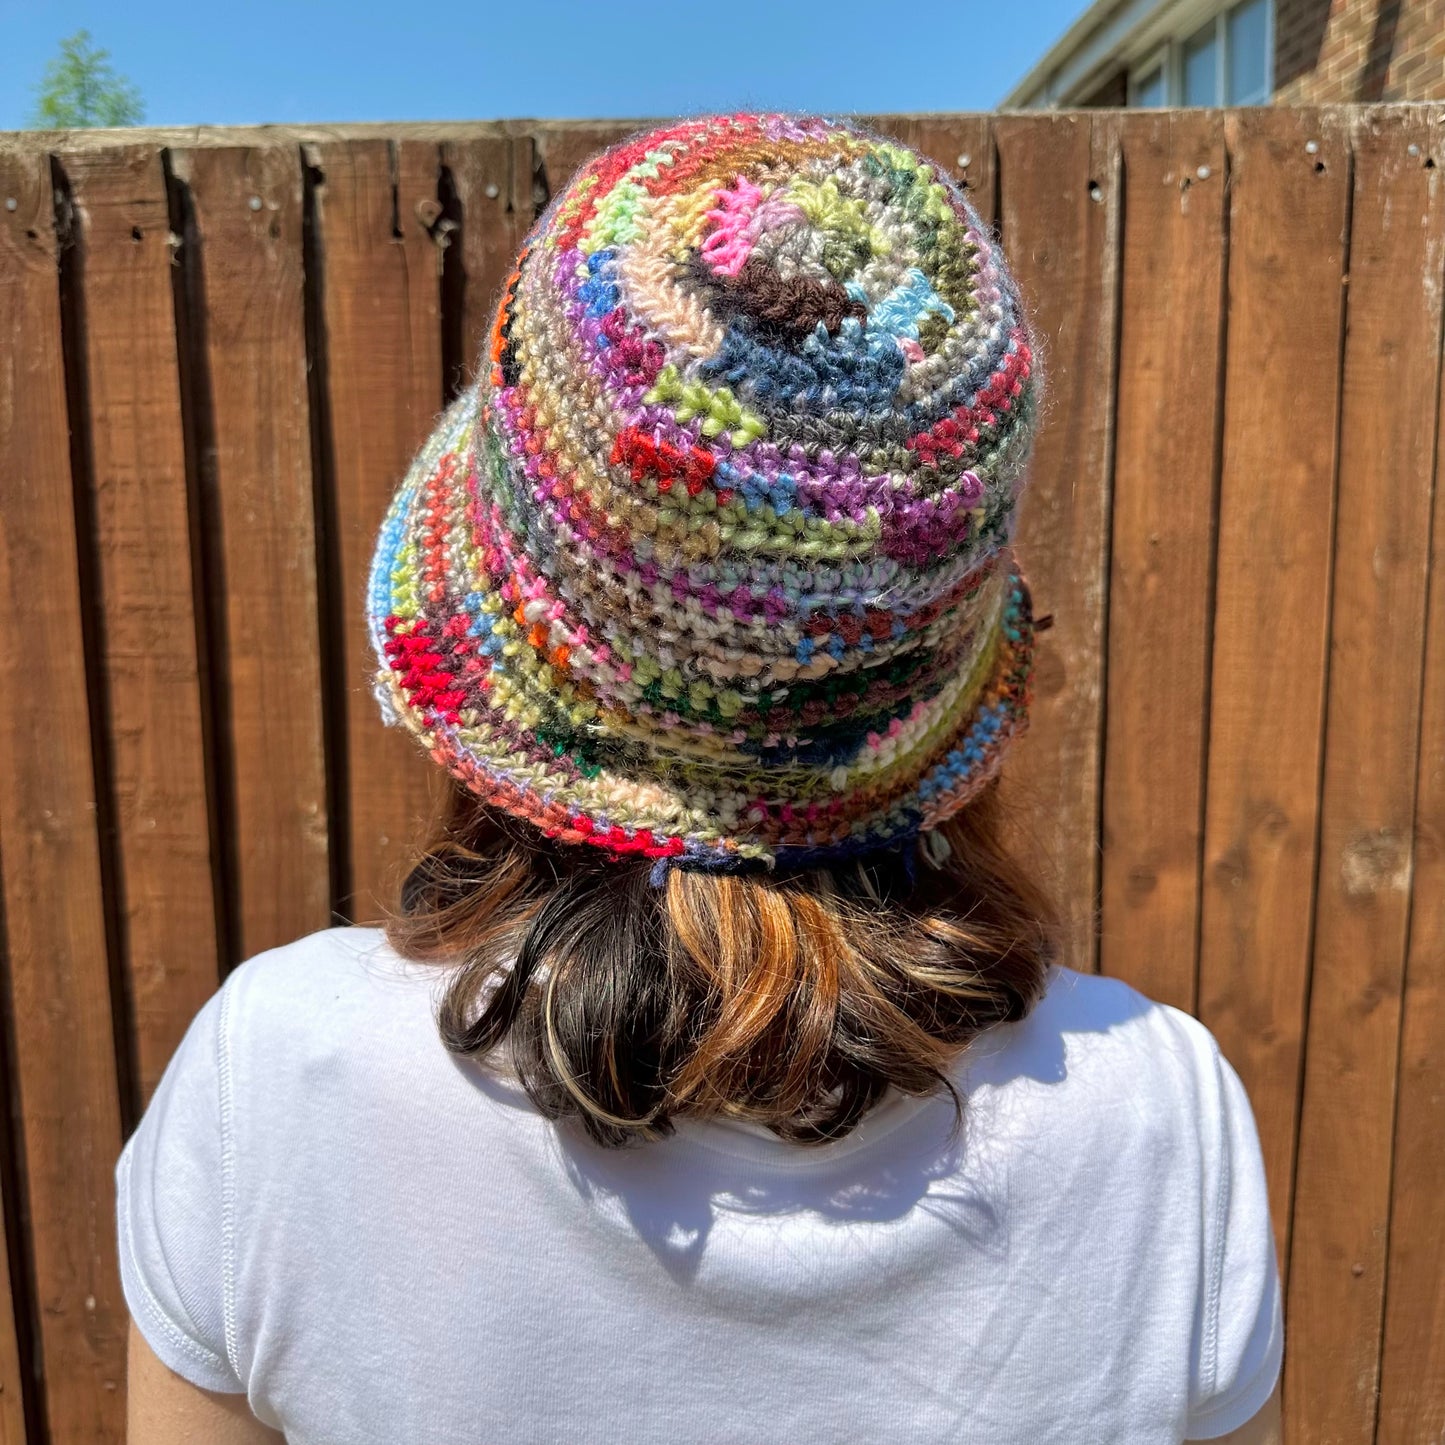 1 of 1 handmade crochet bucket hat made from leftover scraps of yarn